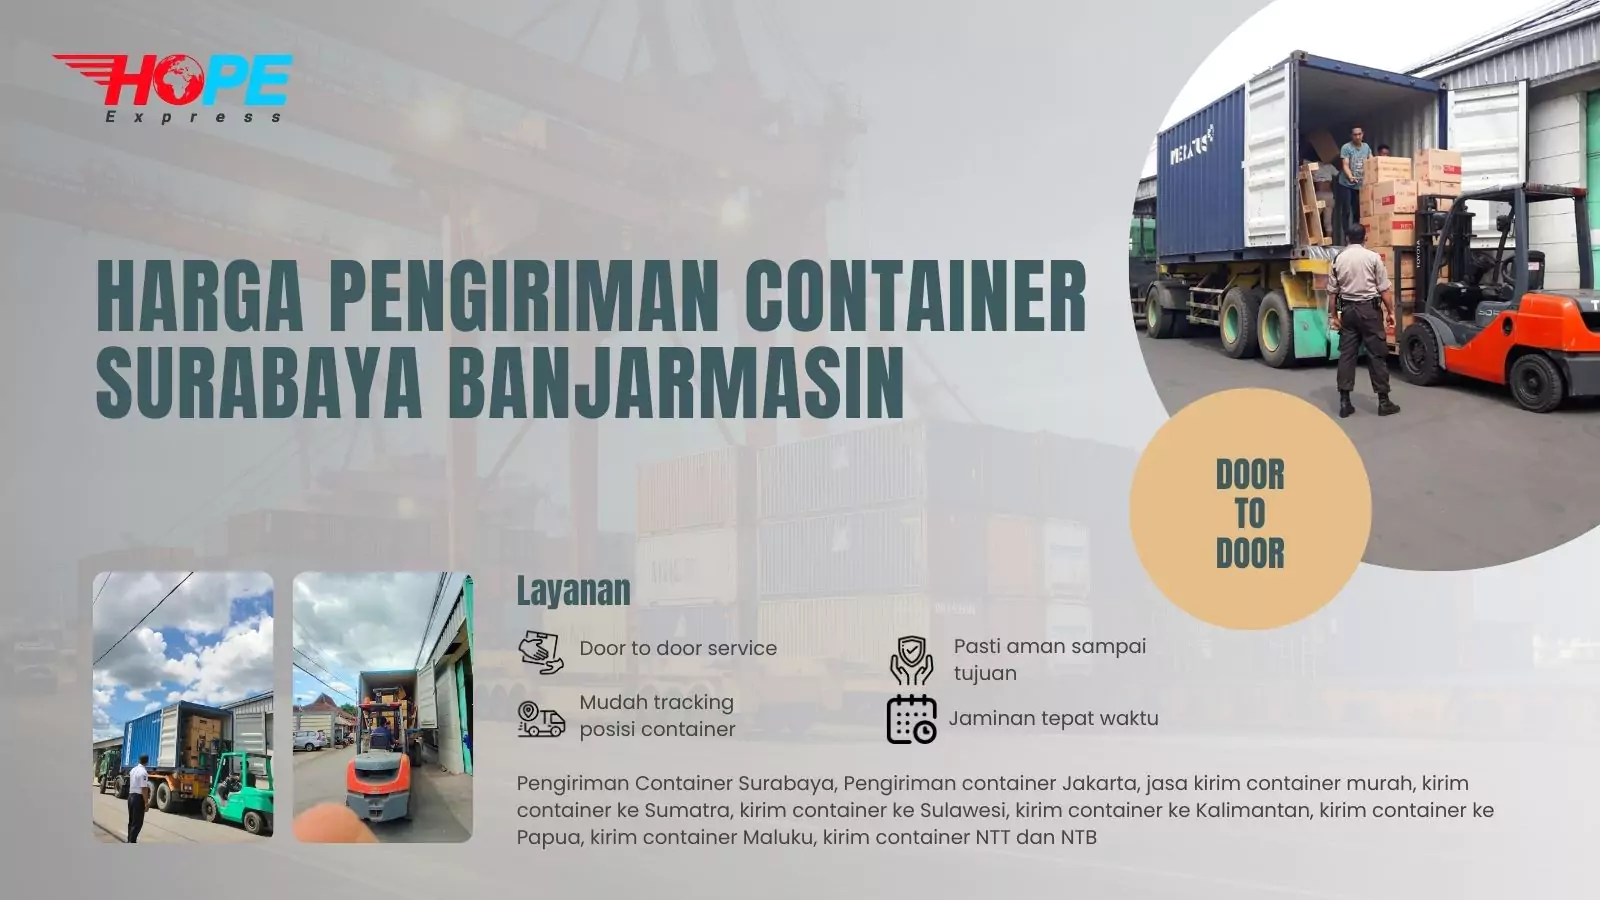 Harga Pengiriman Container Jakarta Banjarmasin